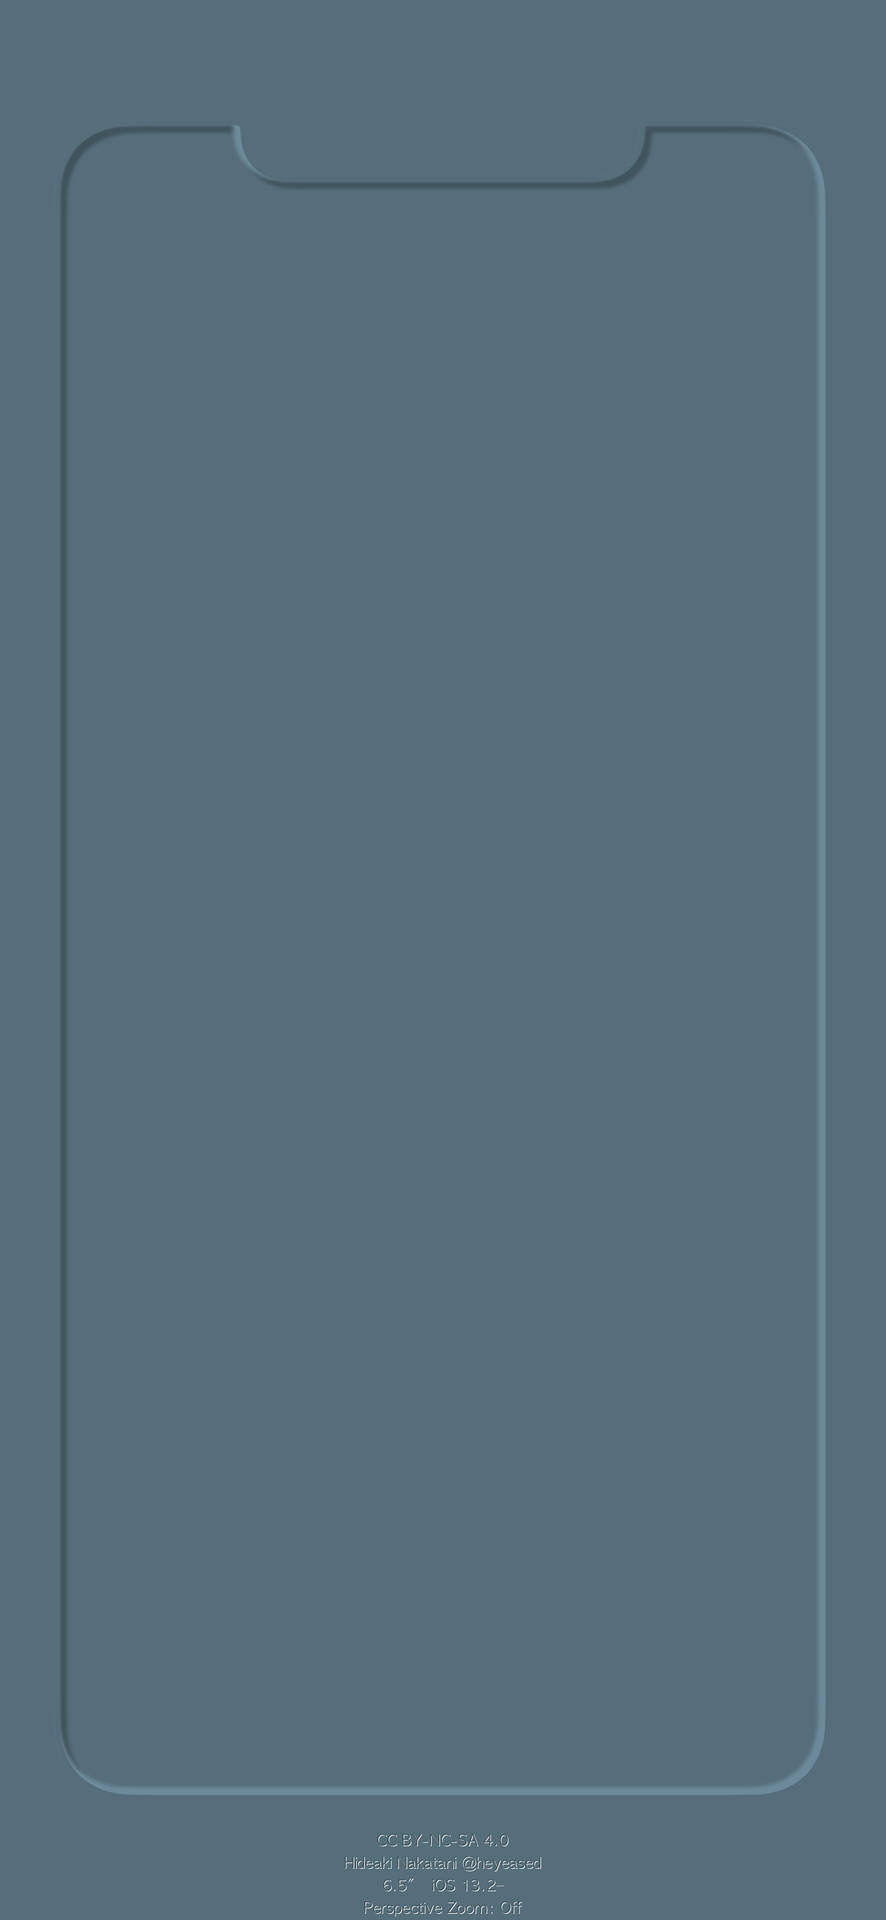 Outline 3d Gray Display Iphone Wallpaper